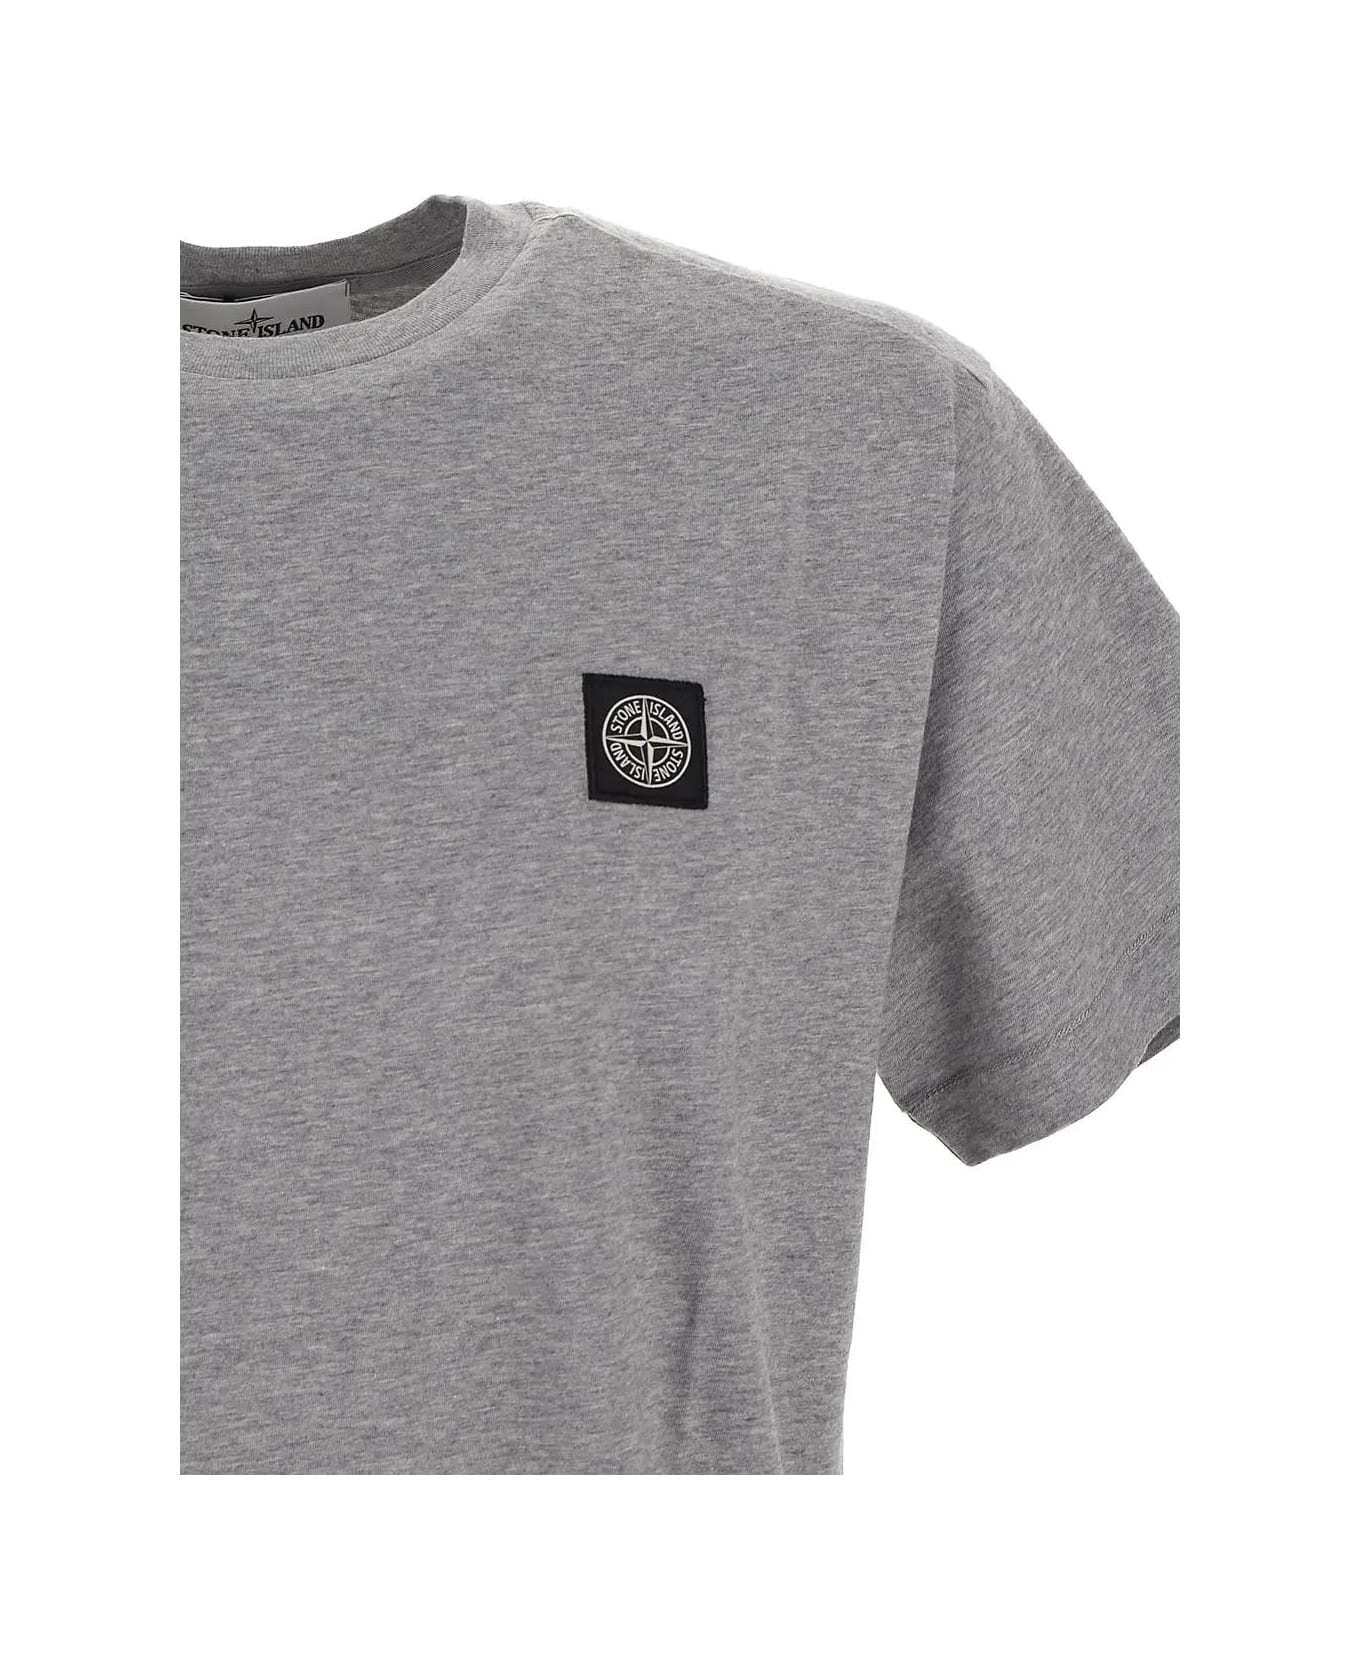 Stone Island Cotton T-shirt - Grey